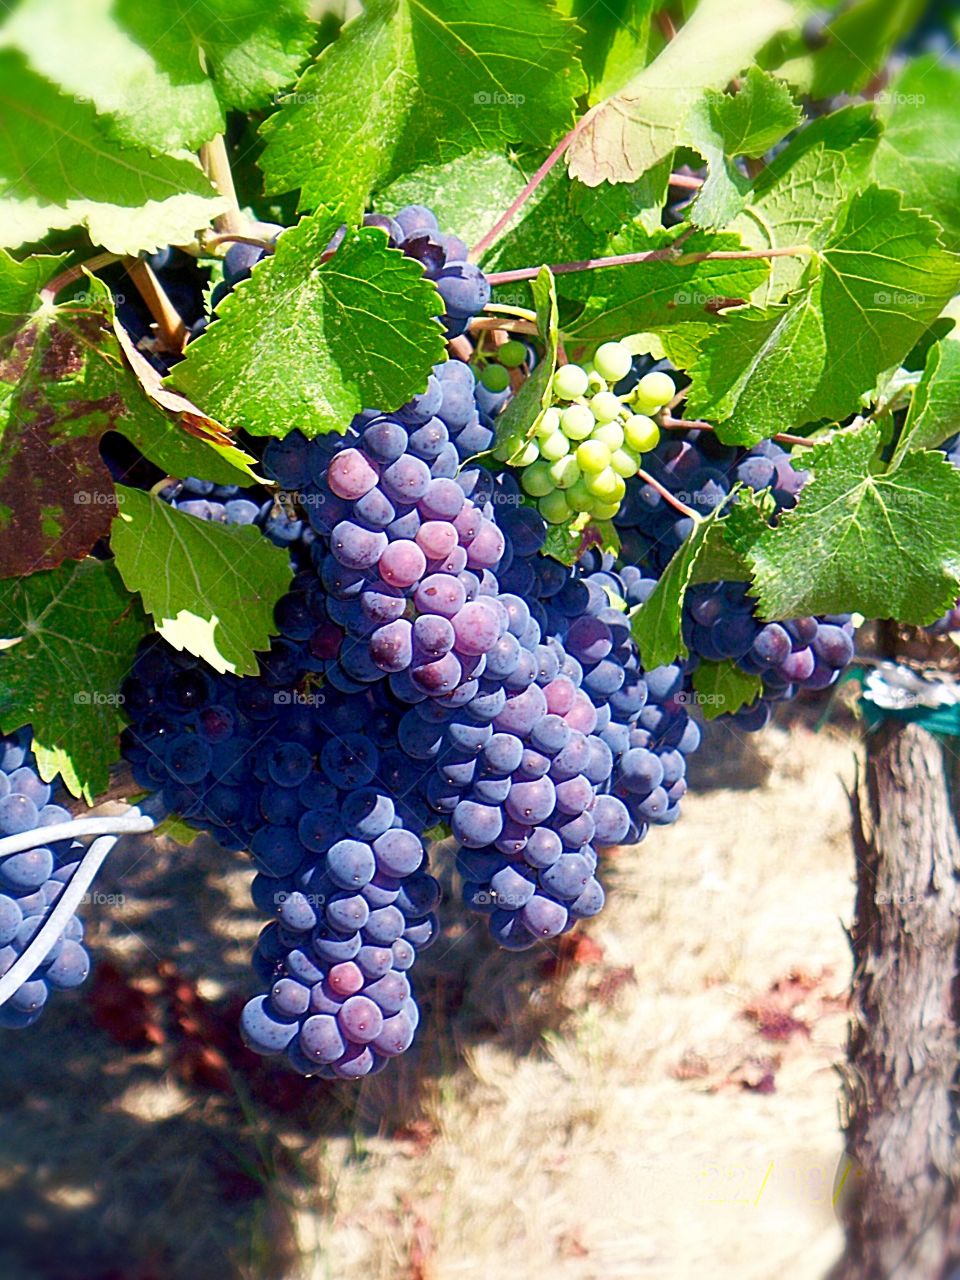 Wine grapes at the Artesa Winery in Napa Valley.